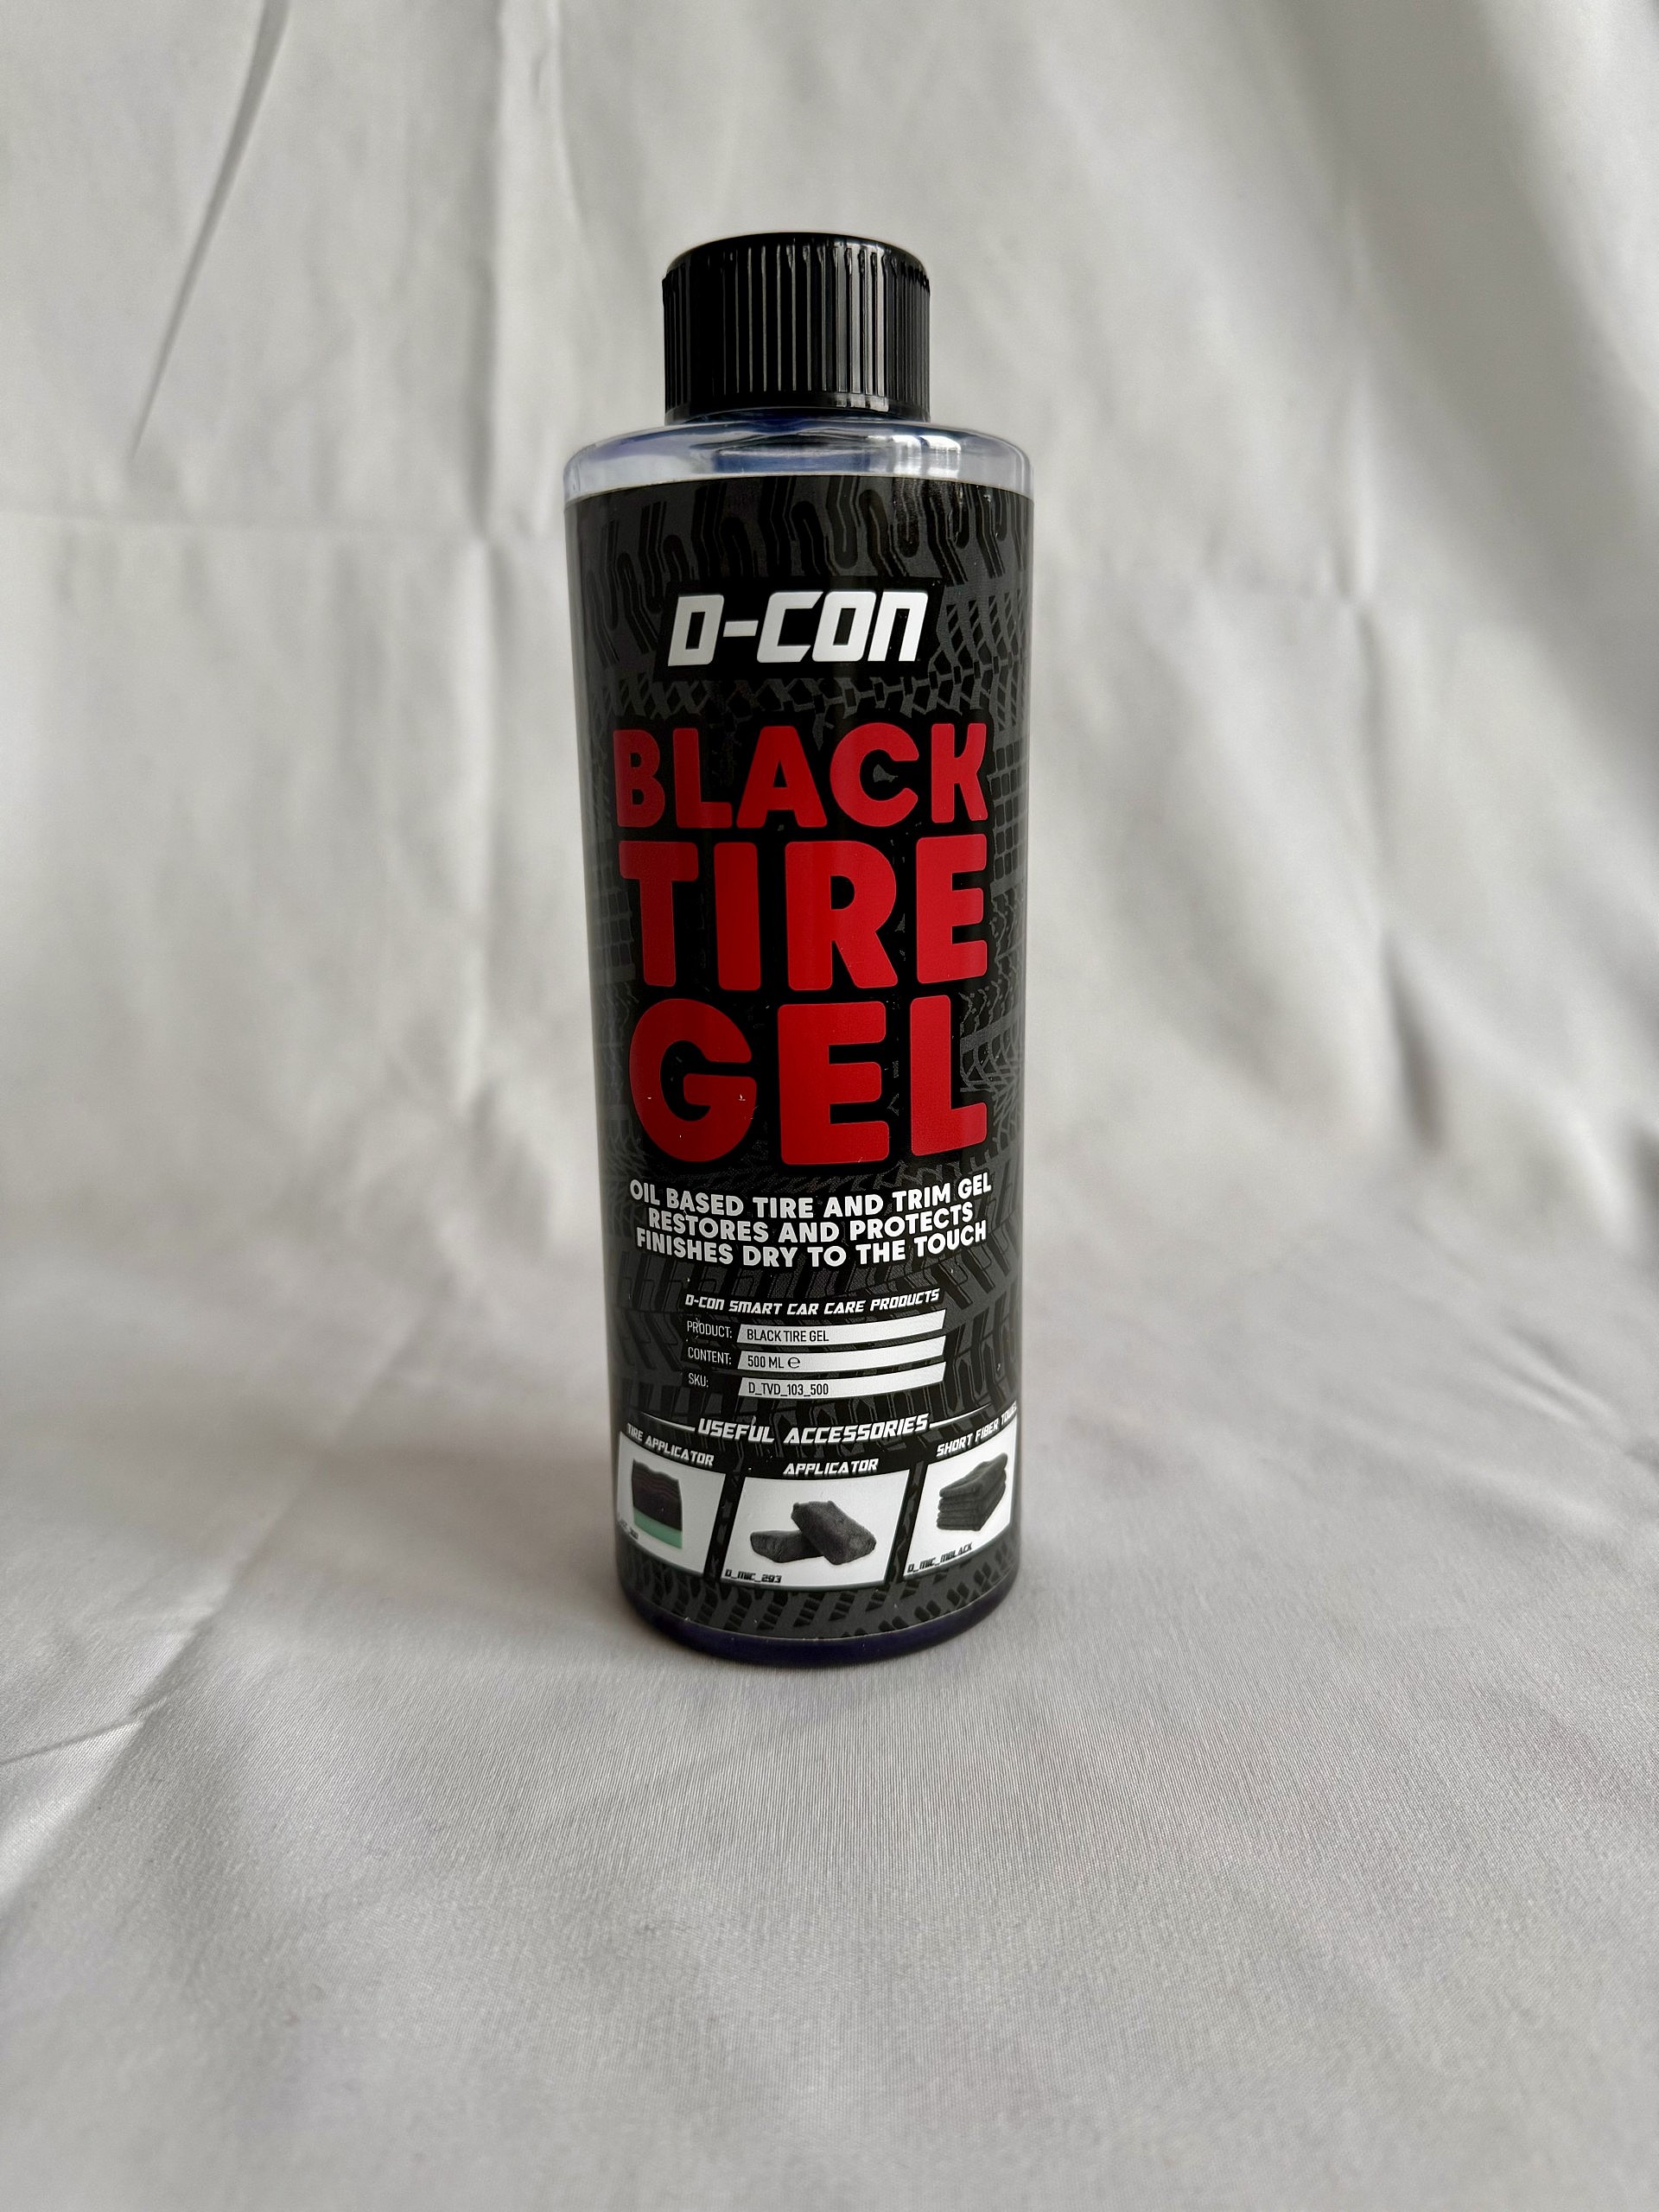 D-Con Black Tire Gel